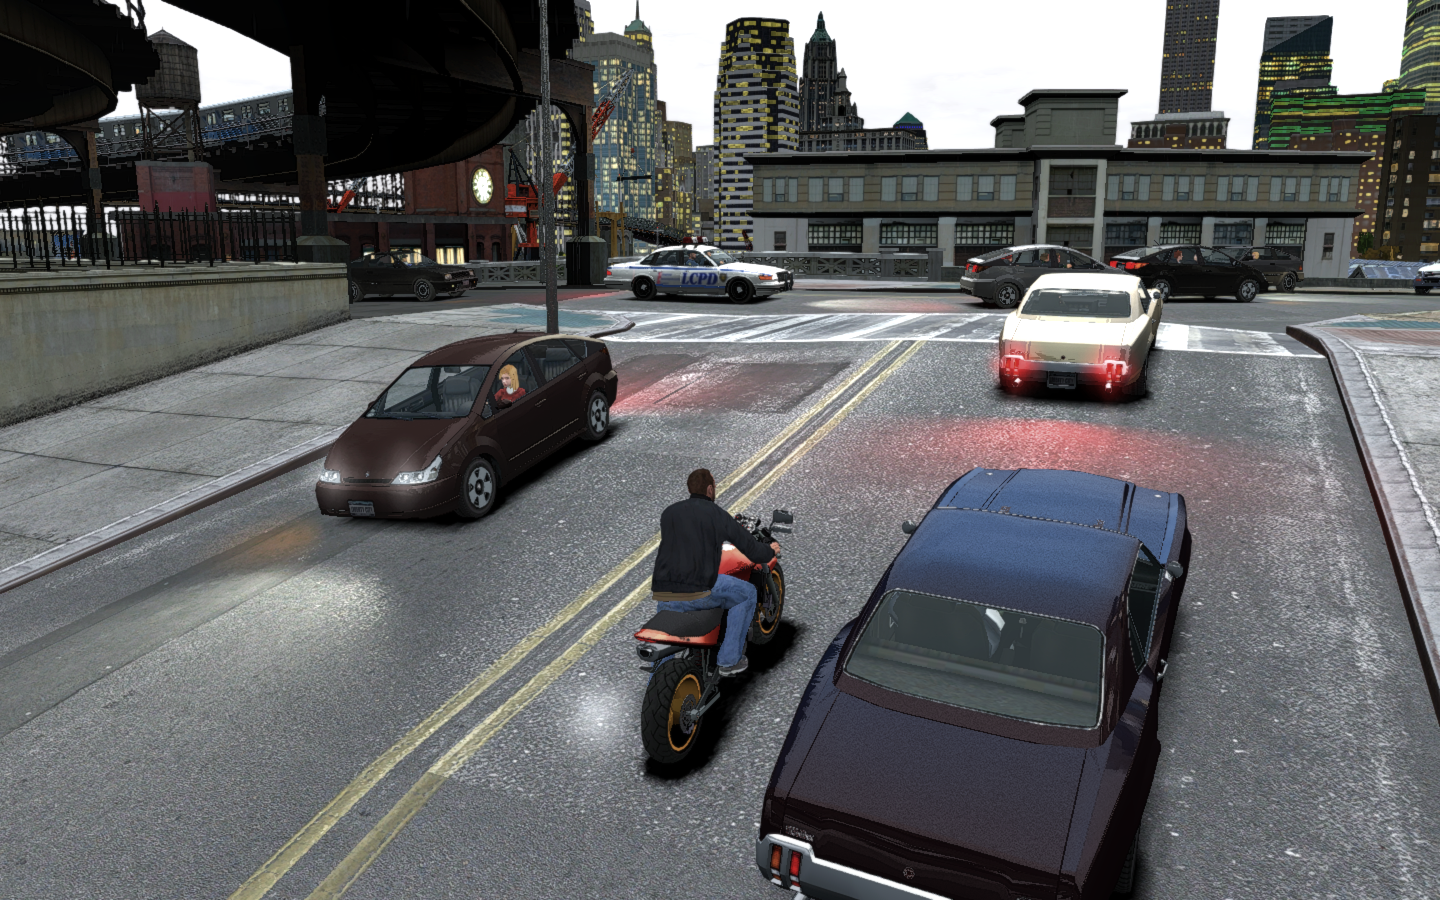 GTA IV ENHANCED Reshade SET(DXVK COMPATIBLE) at Grand Theft Auto